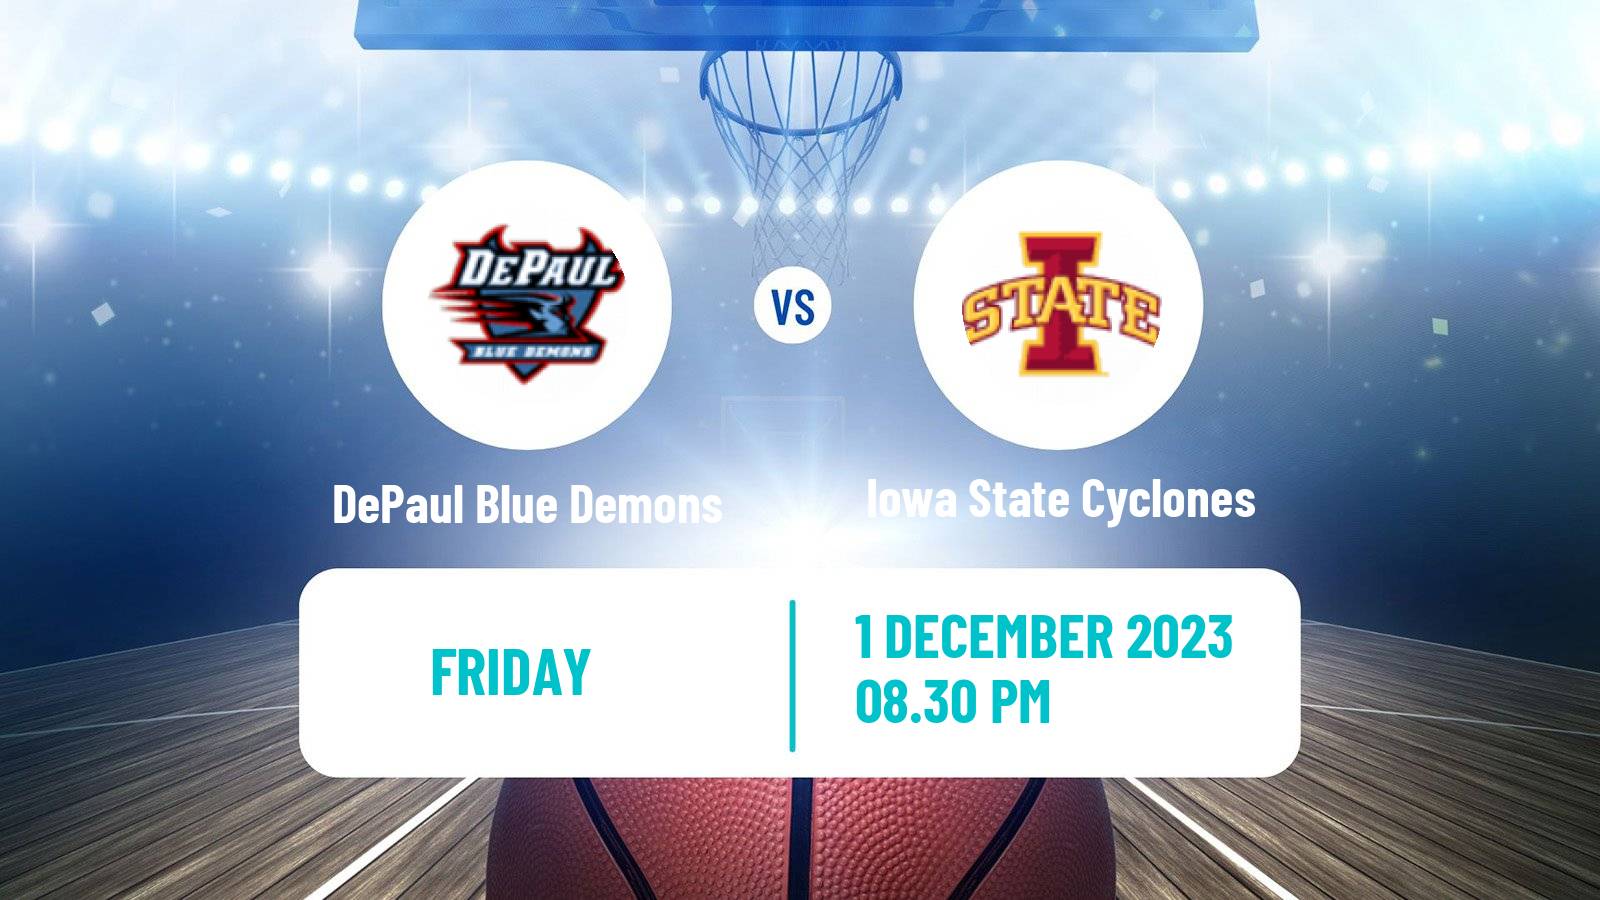 Basketball NCAA College Basketball DePaul Blue Demons - Iowa State Cyclones